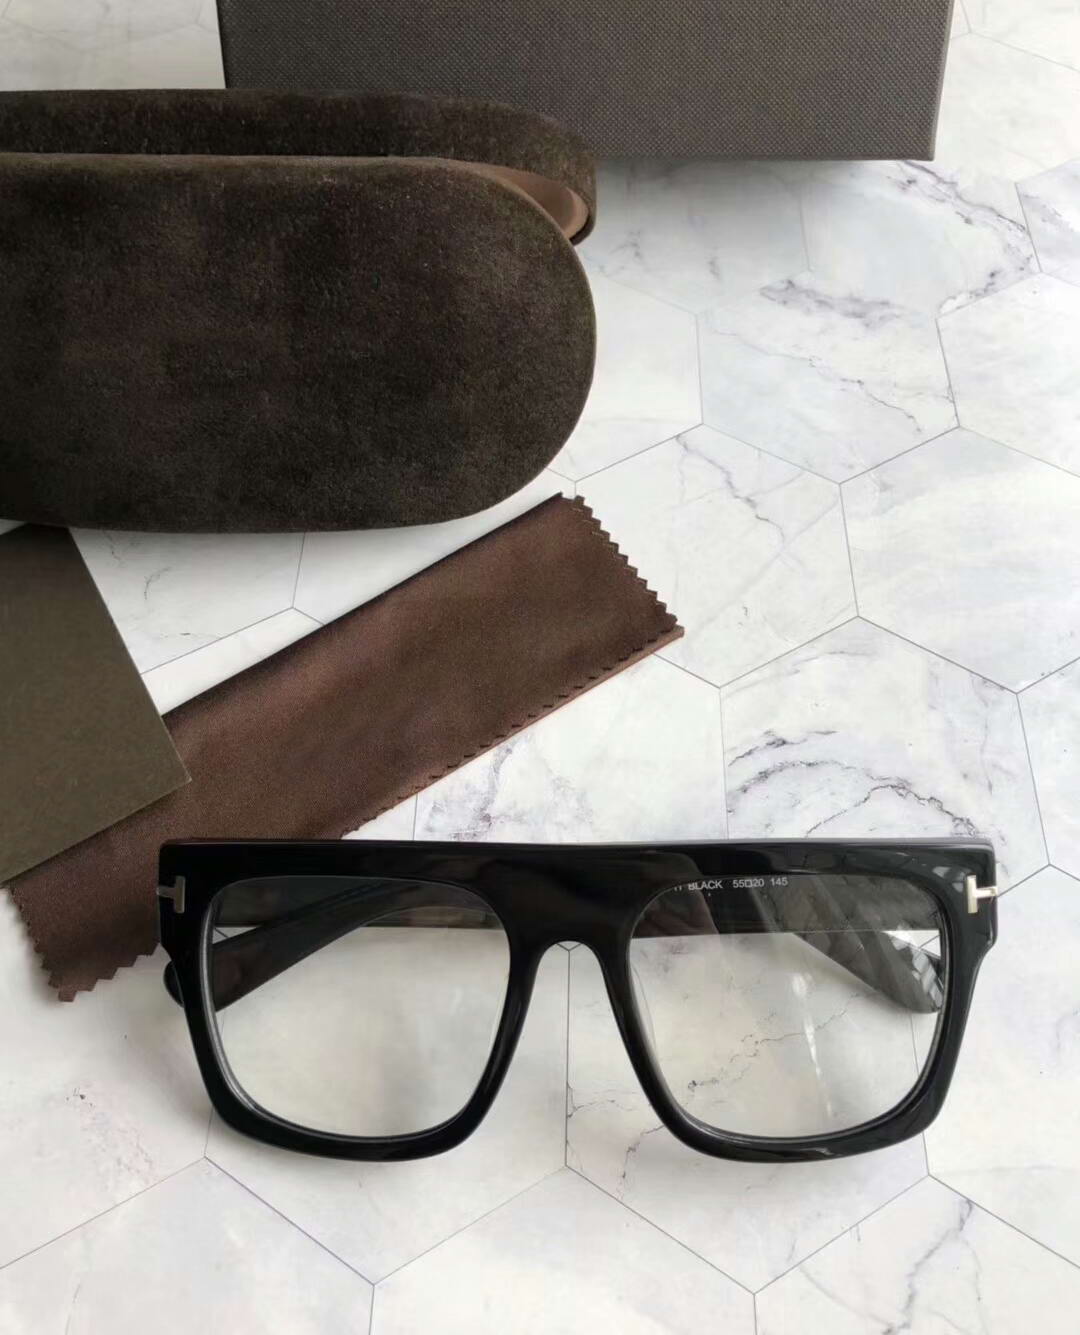 Luxury-Mens ft0711 Fausto Eyglasses Glasses Black Frame Clear Len Gafas de sol designer sunglasses glasses Eyewear high quality New with Box